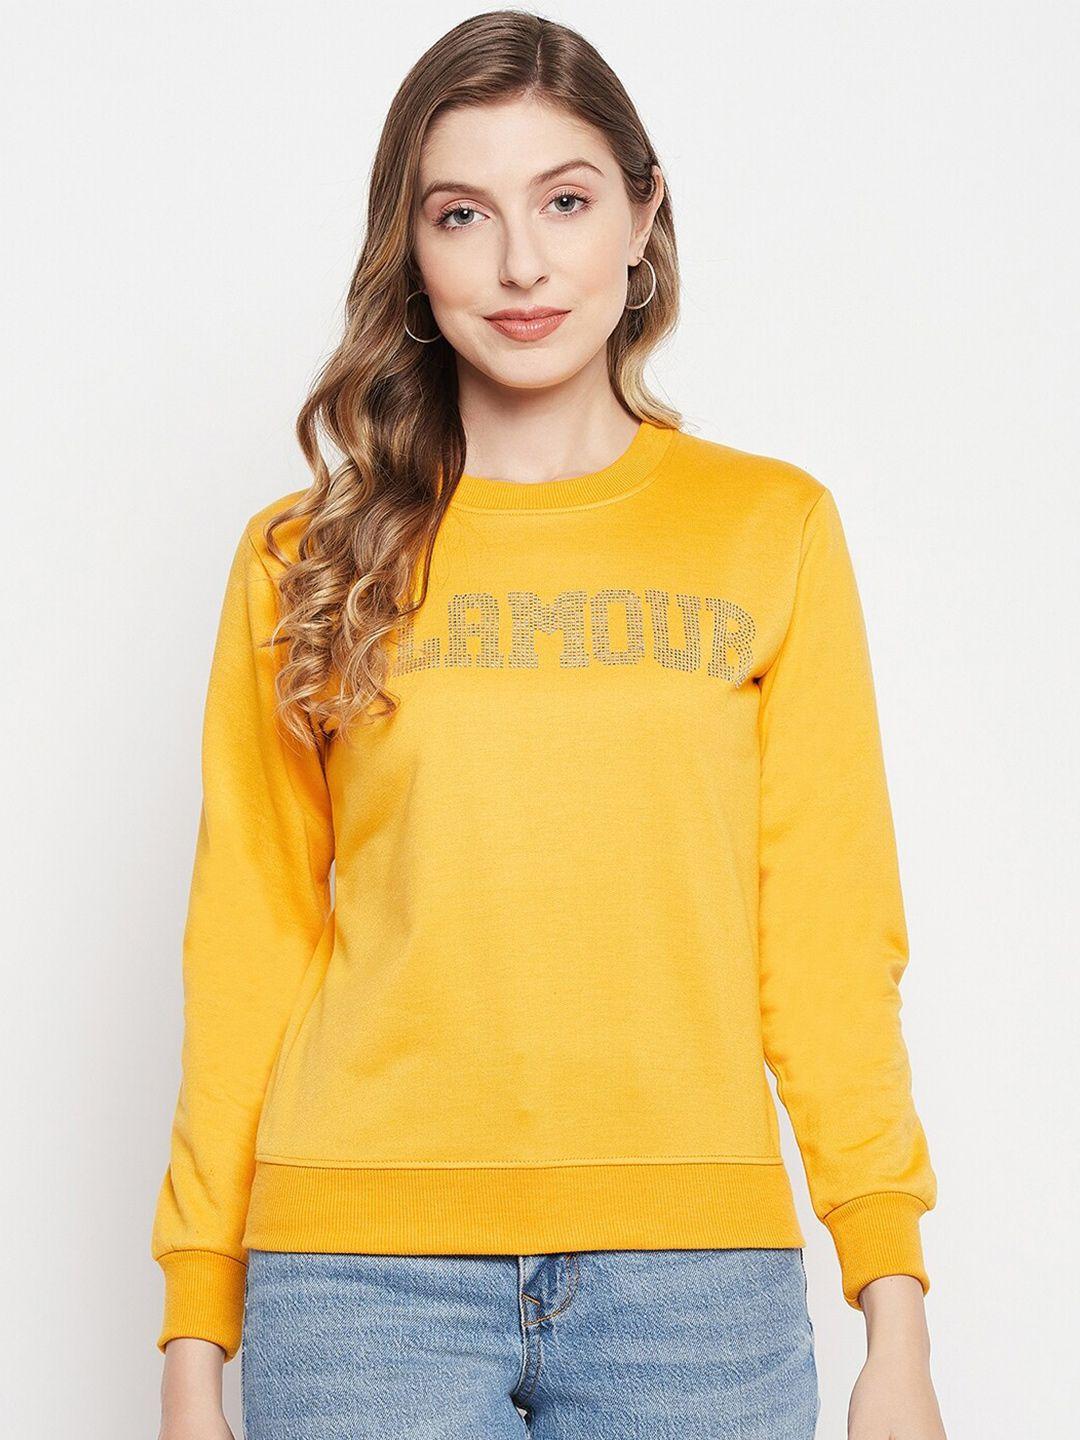 strop-women-printed-cotton-sweatshirt